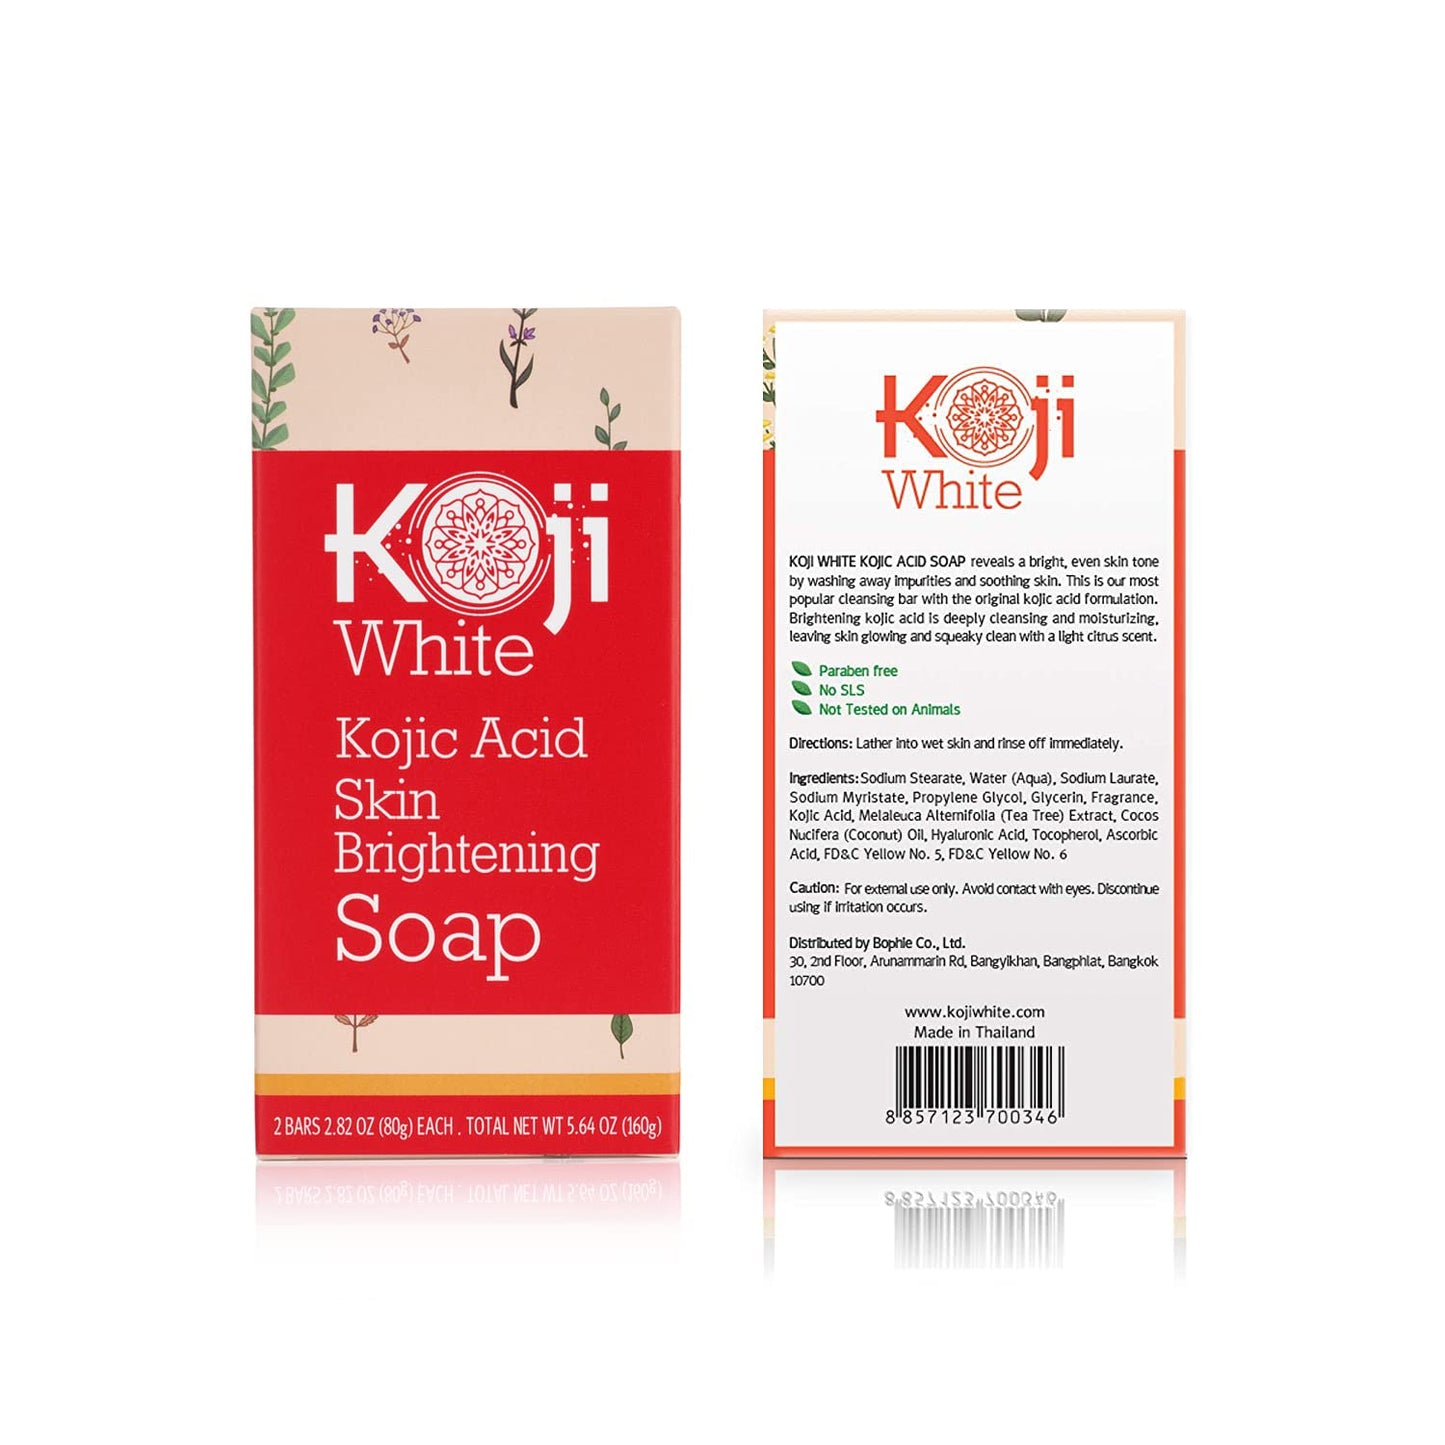 Pure Kojic Acid Brightening & Glutathione Soap